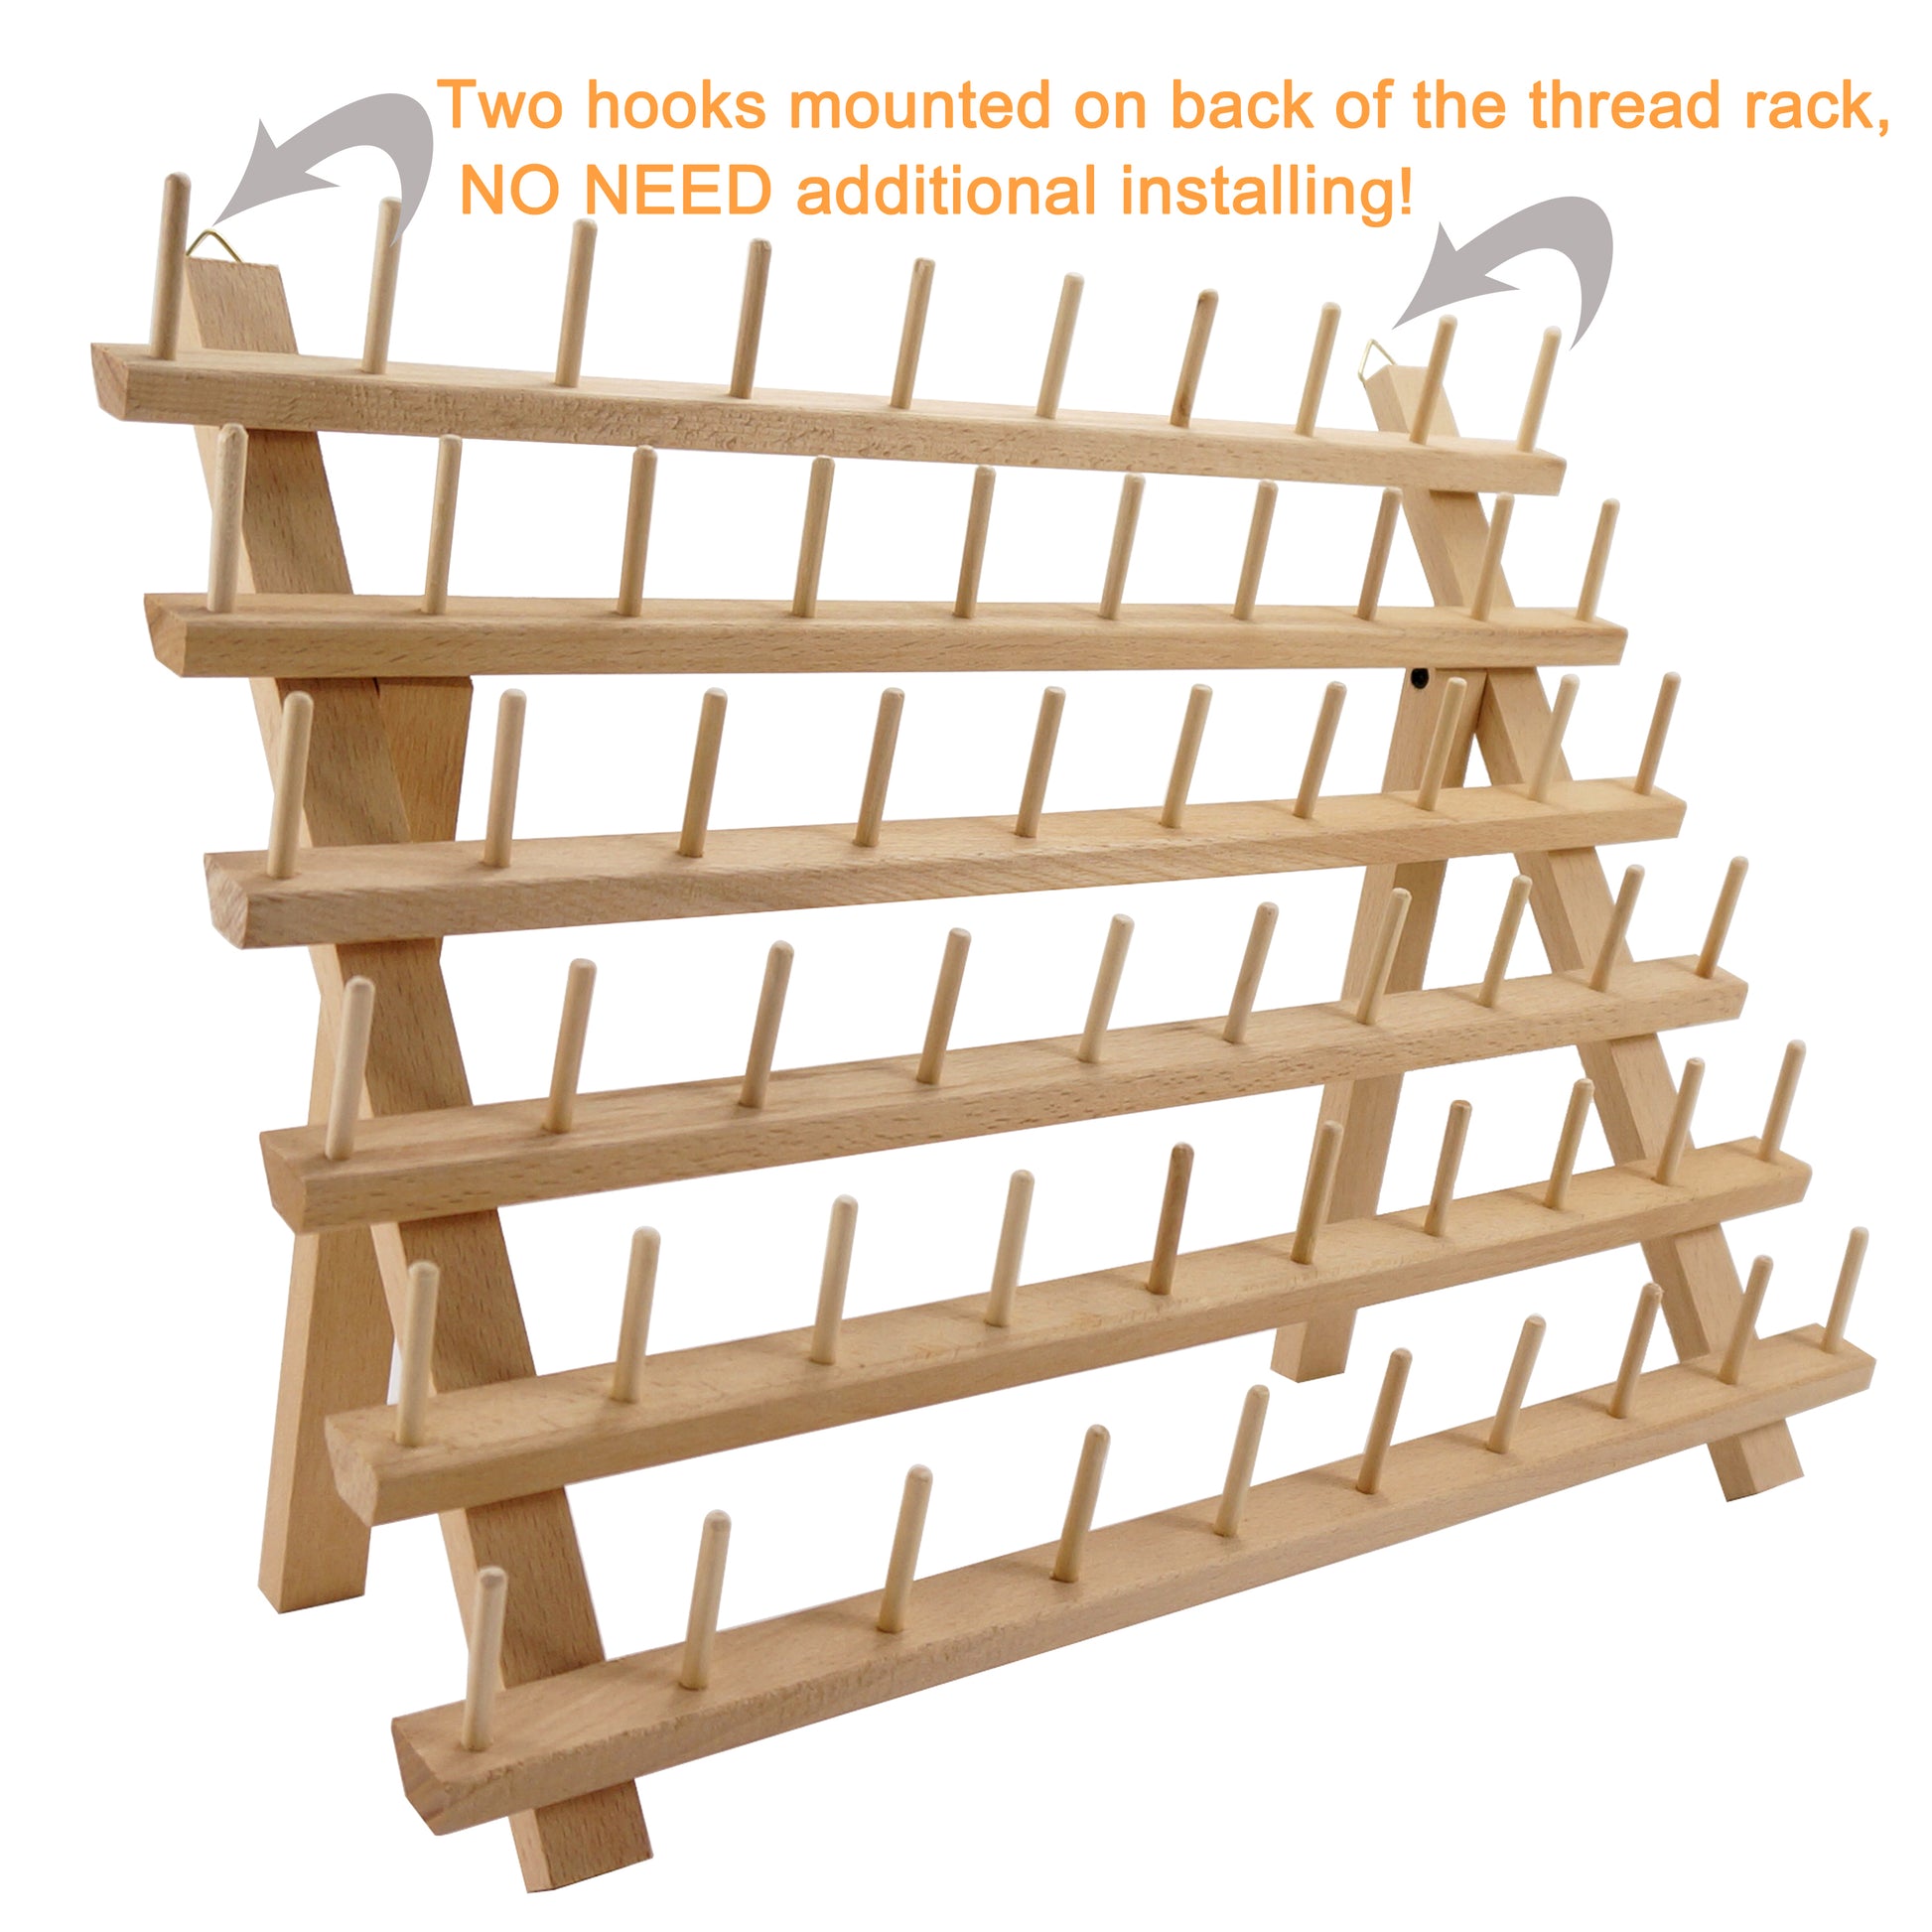 New Brothread 60 Spools Wooden Thread Rack / Thread Holder